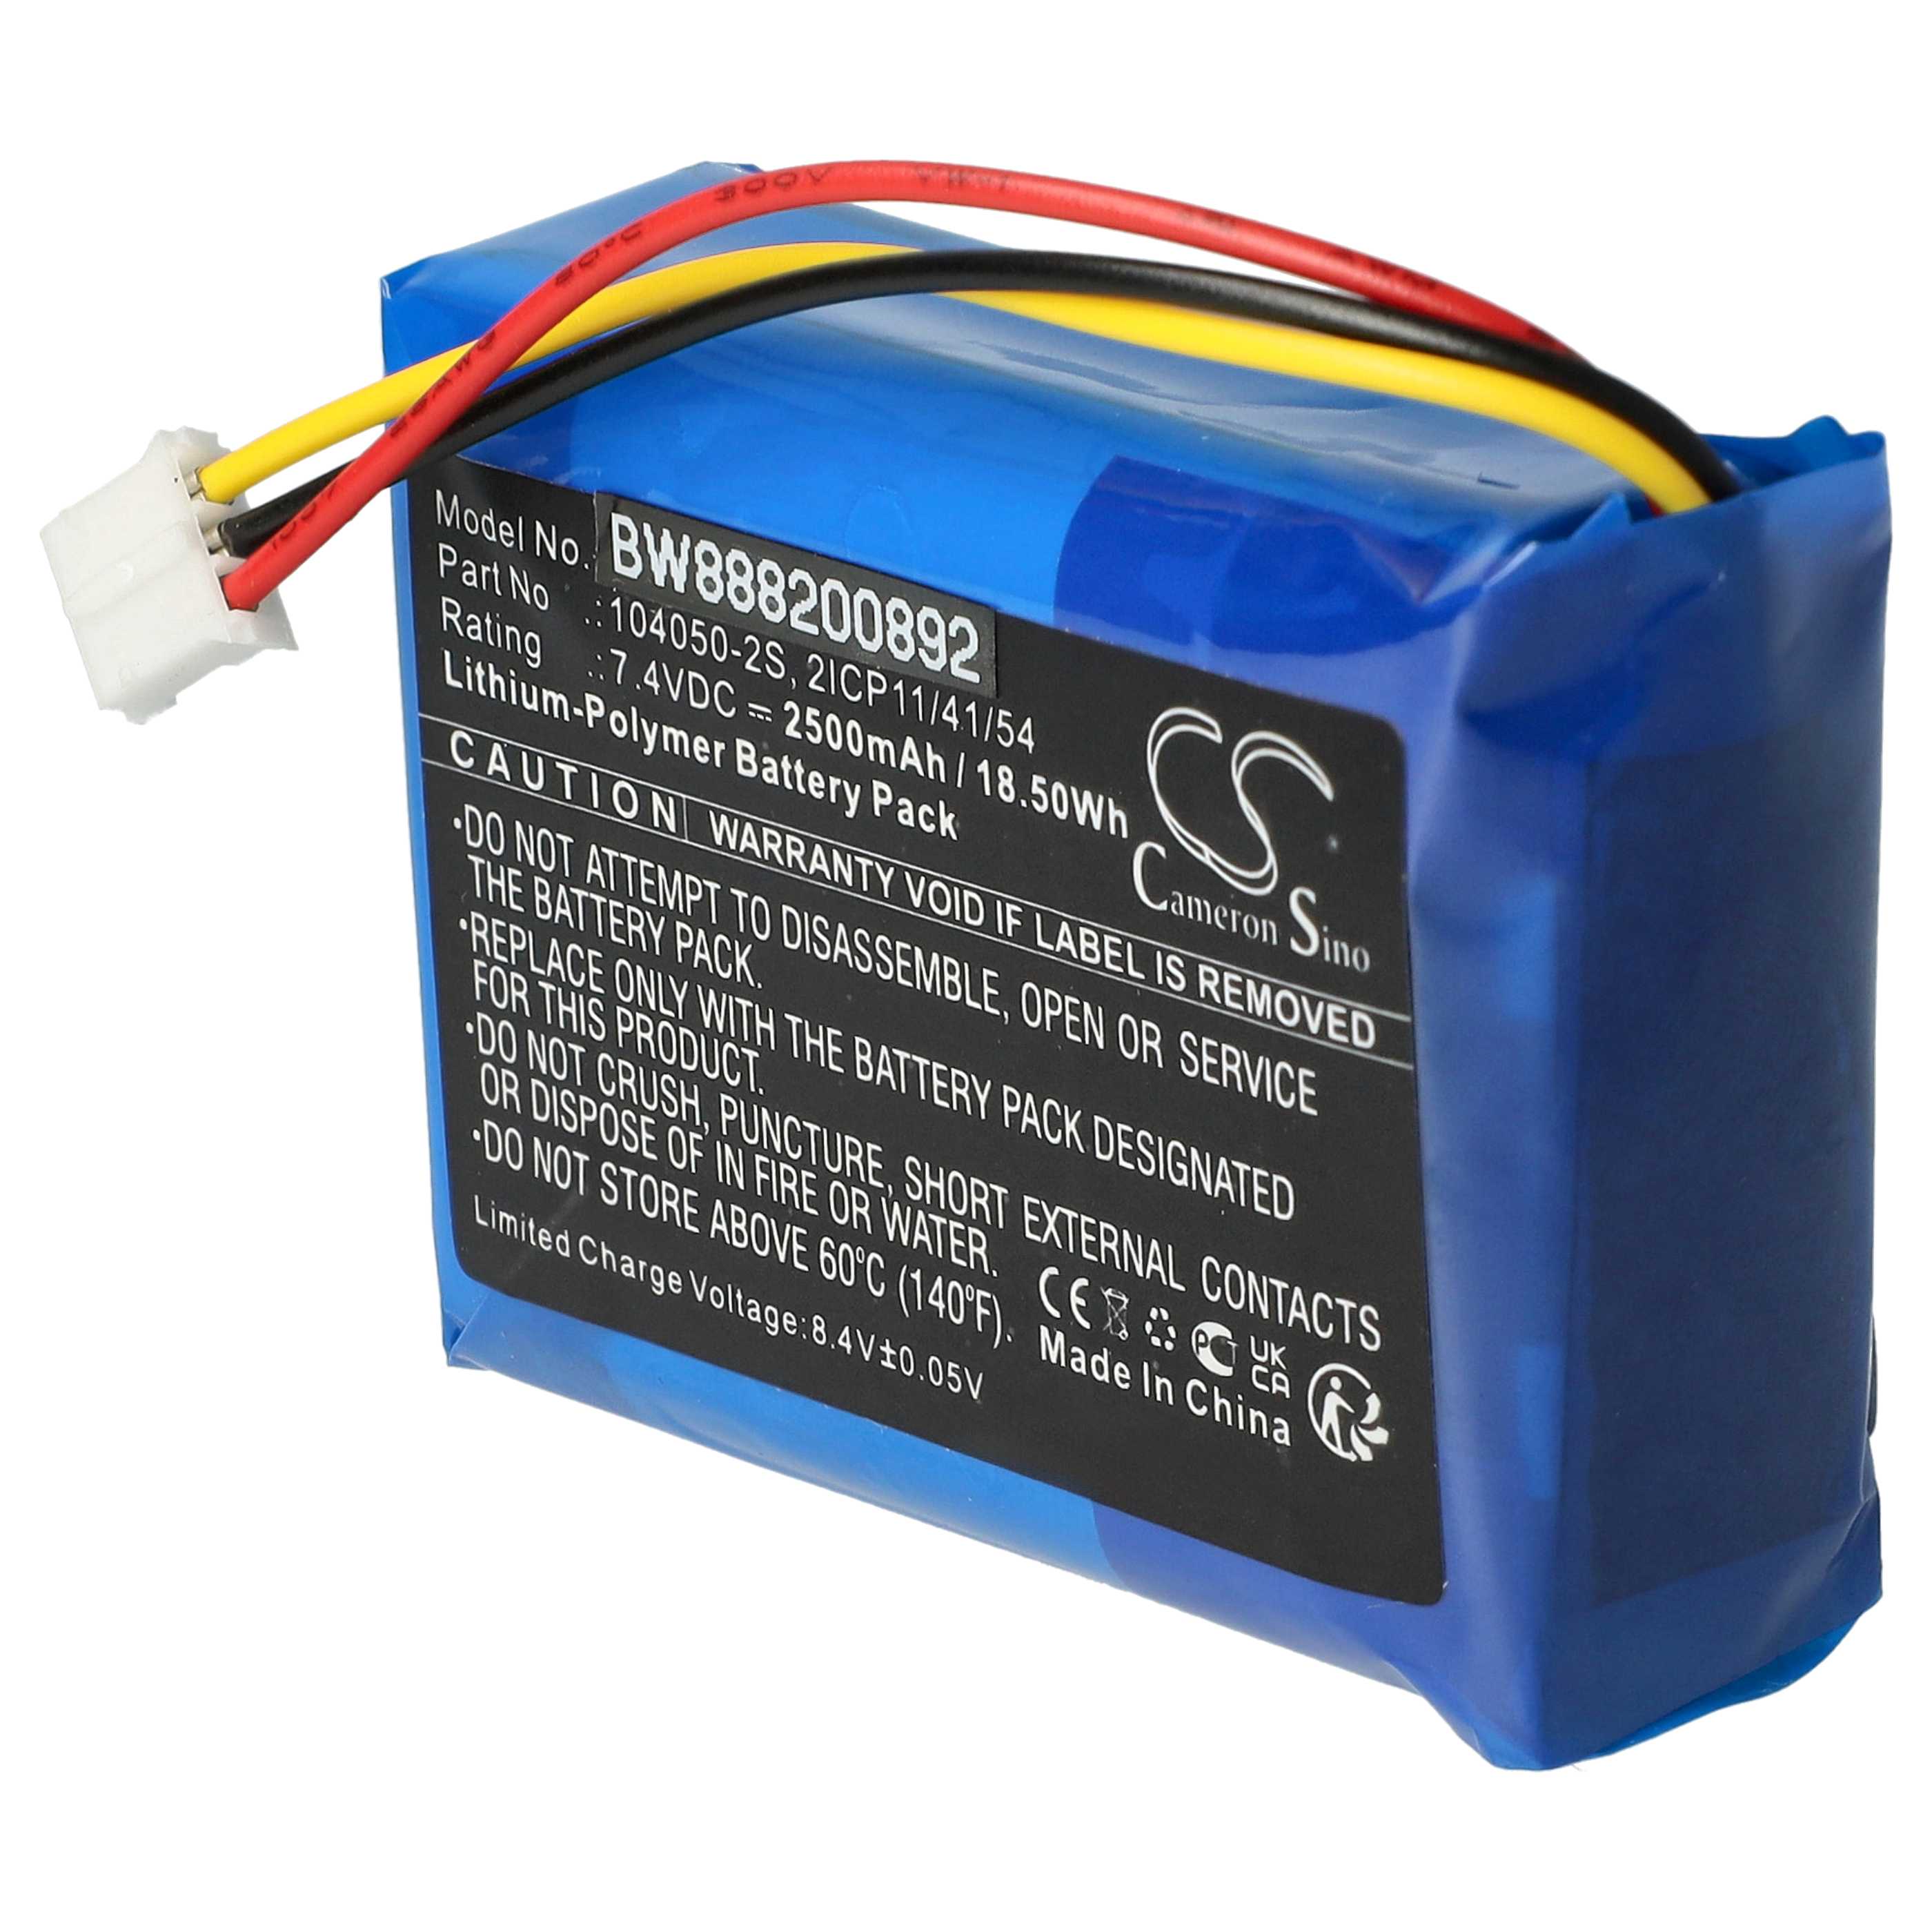  Battery replaces Philips 104050-2S, 2ICP11/41/54 for PhilipsLoudspeaker - Li-polymer 2500 mAh